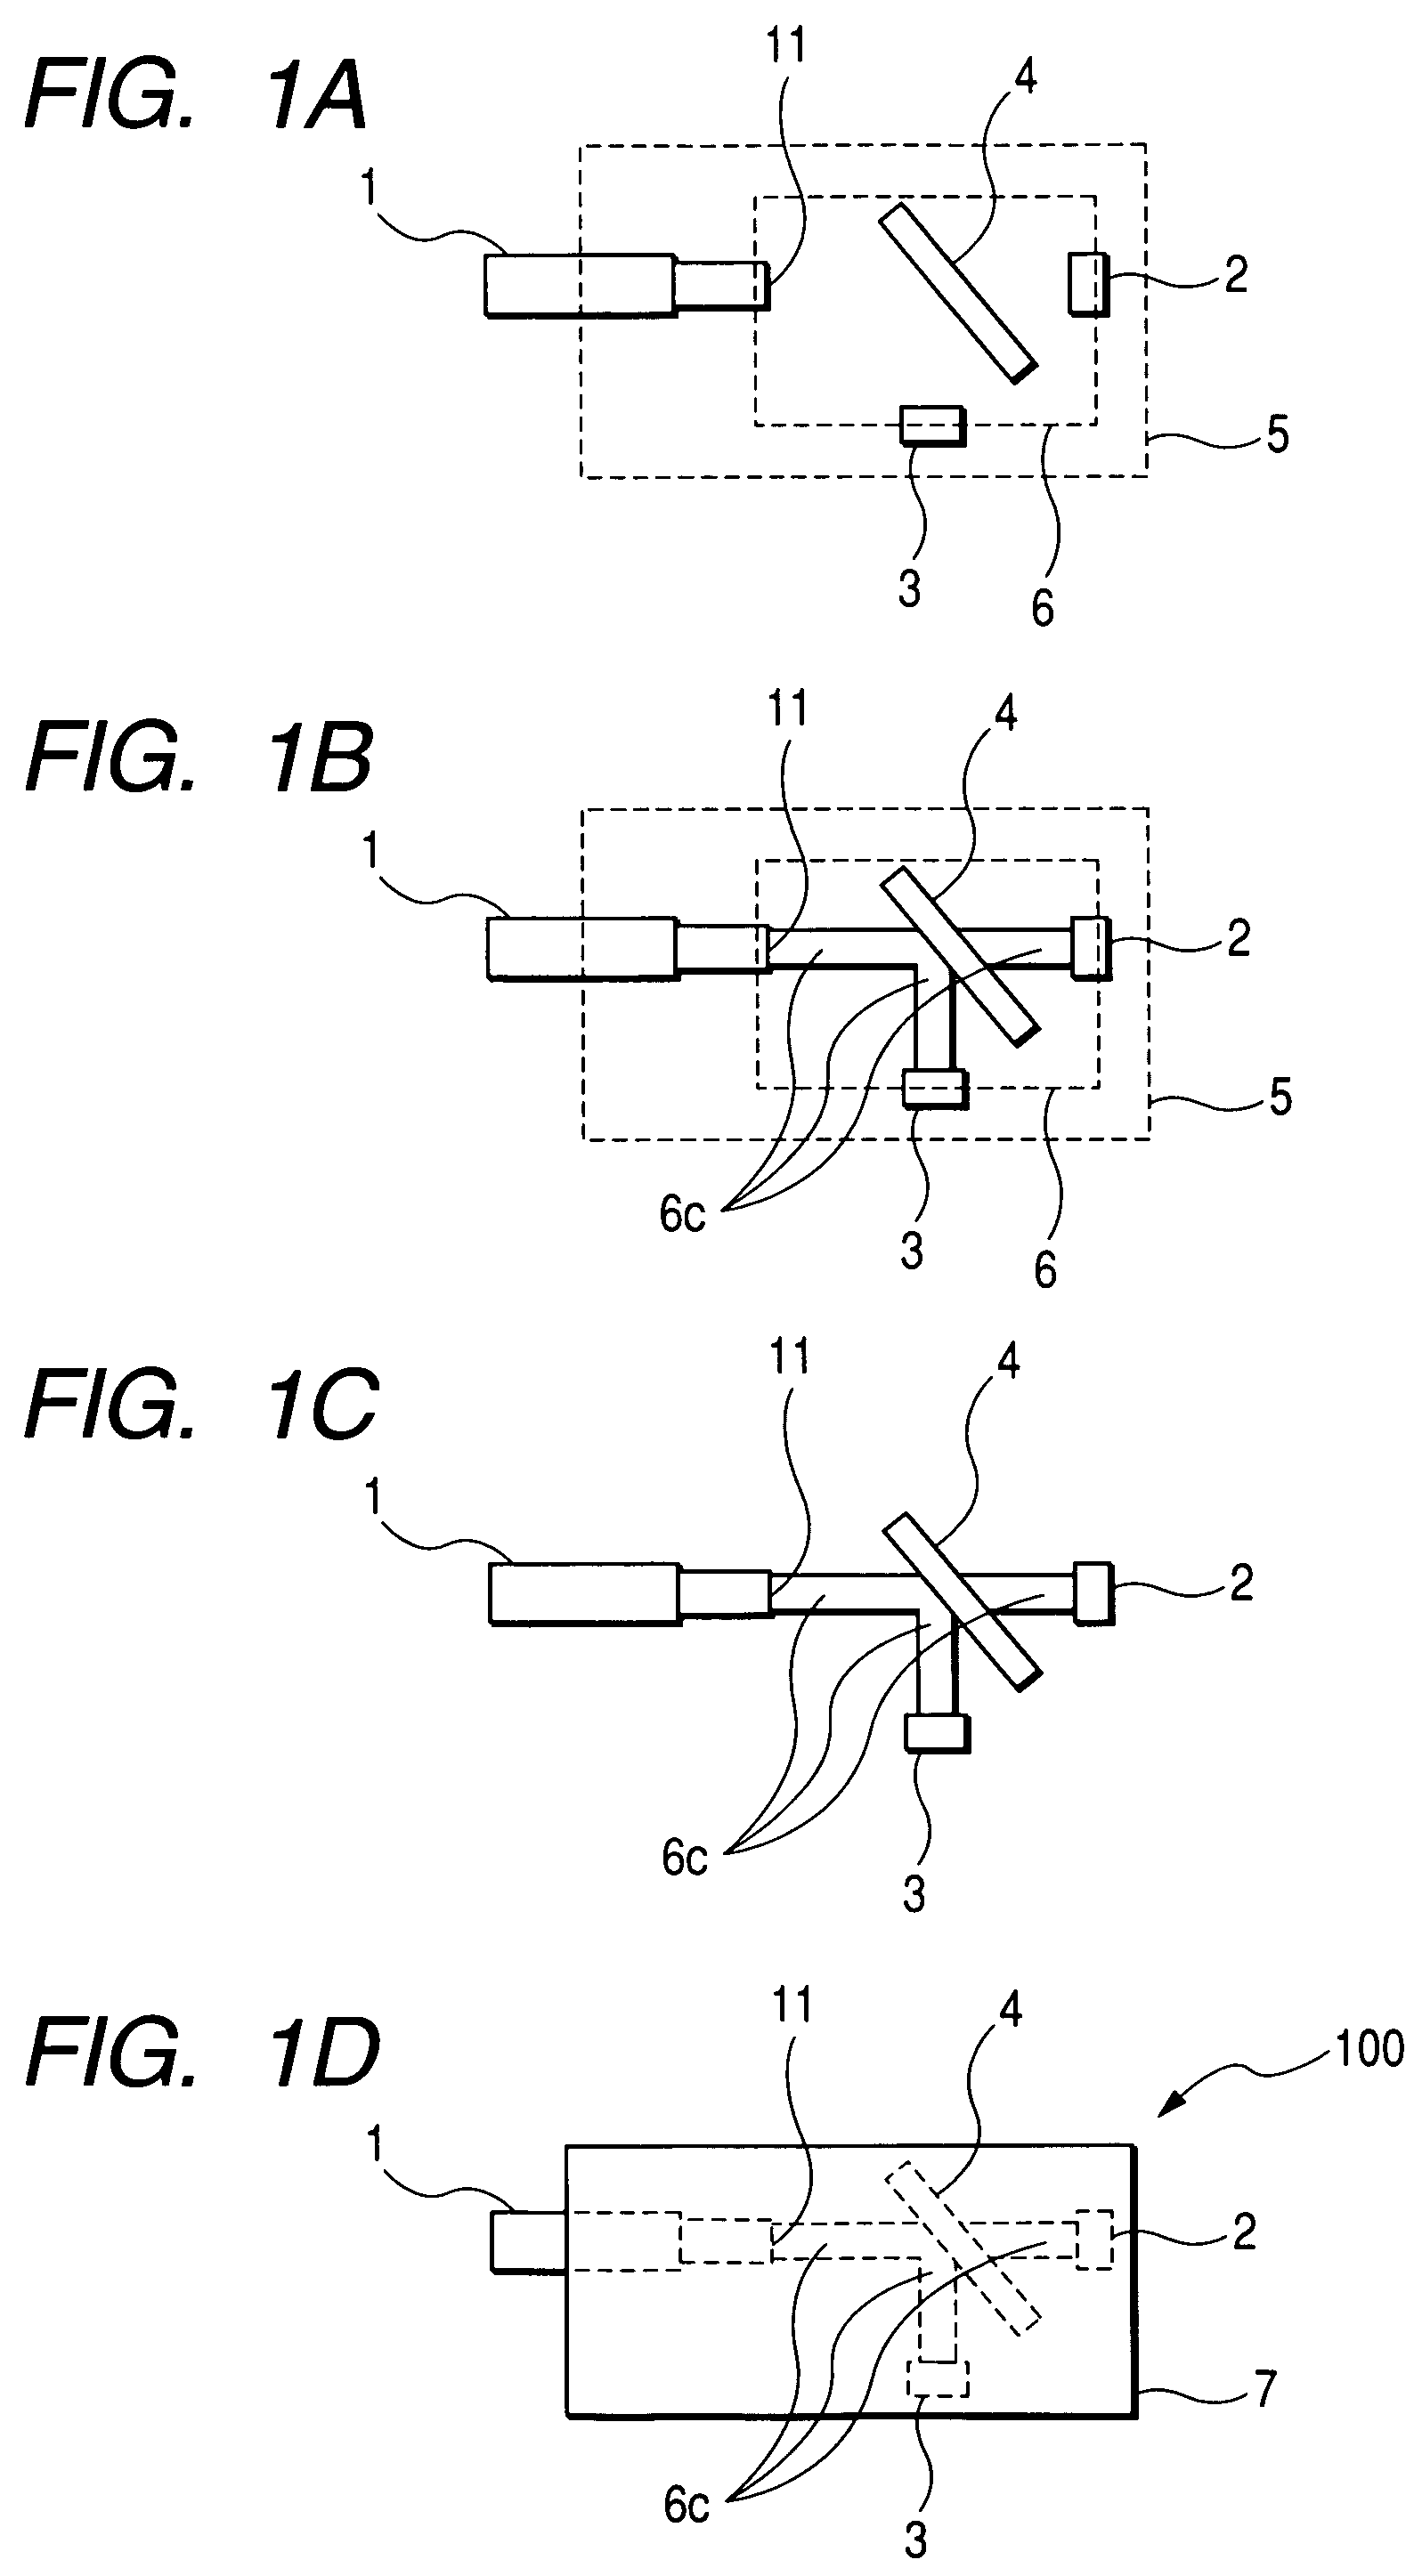 Method of manufacturing an optical module